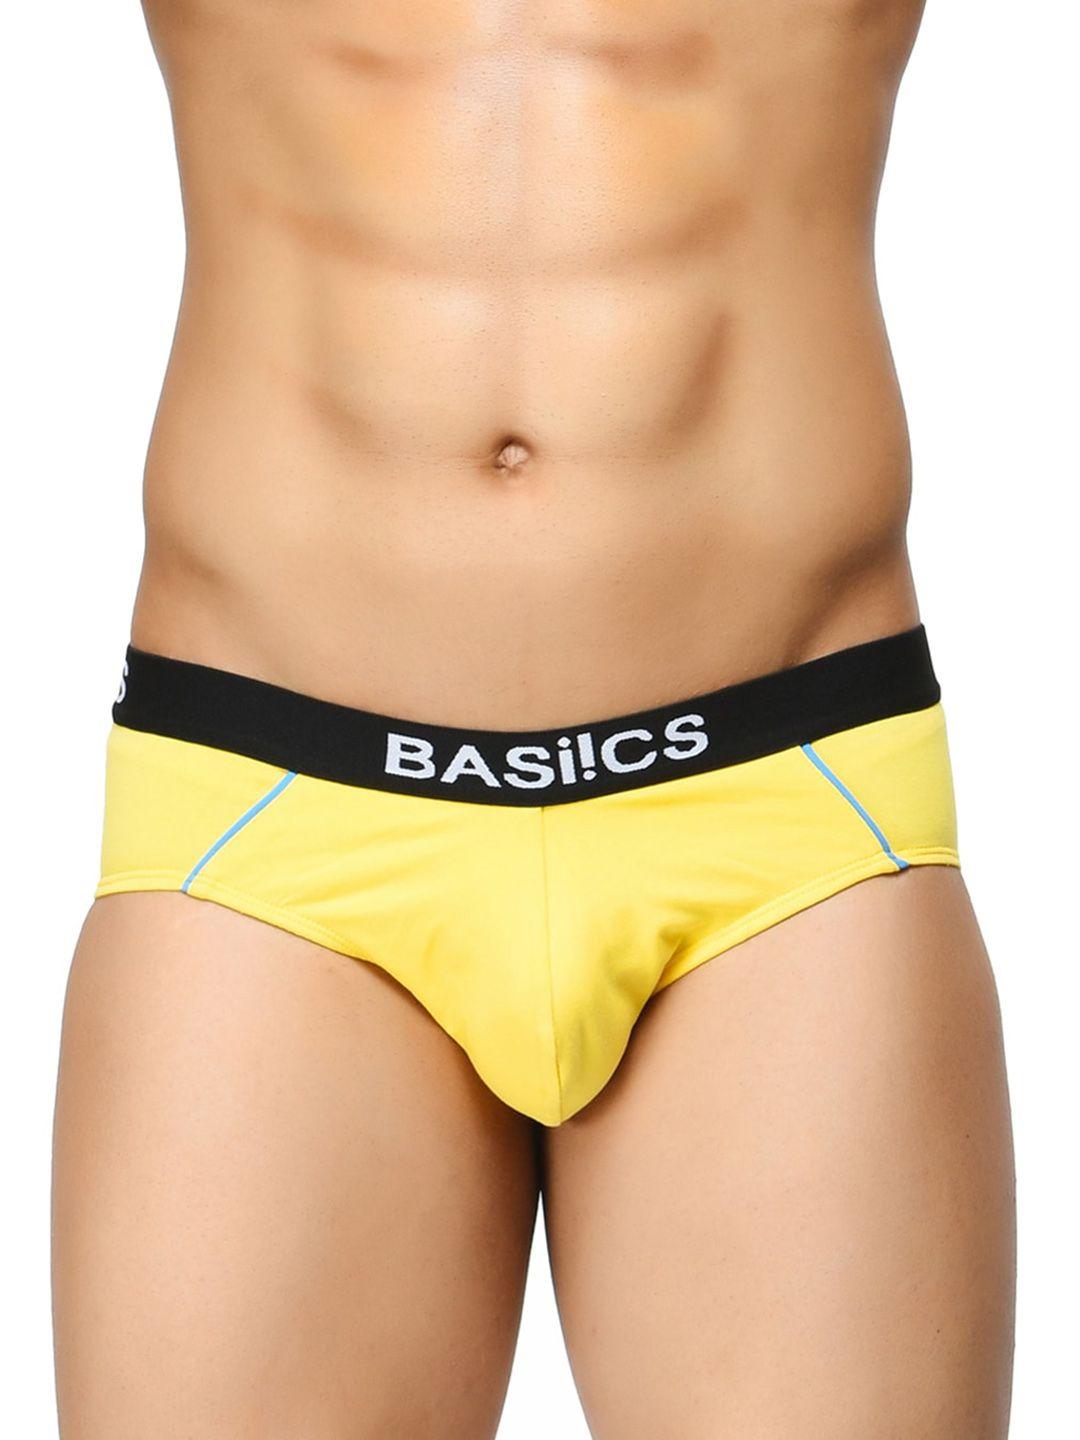 basiics-by-la-intimo-men-inner-elastic-basic-briefs